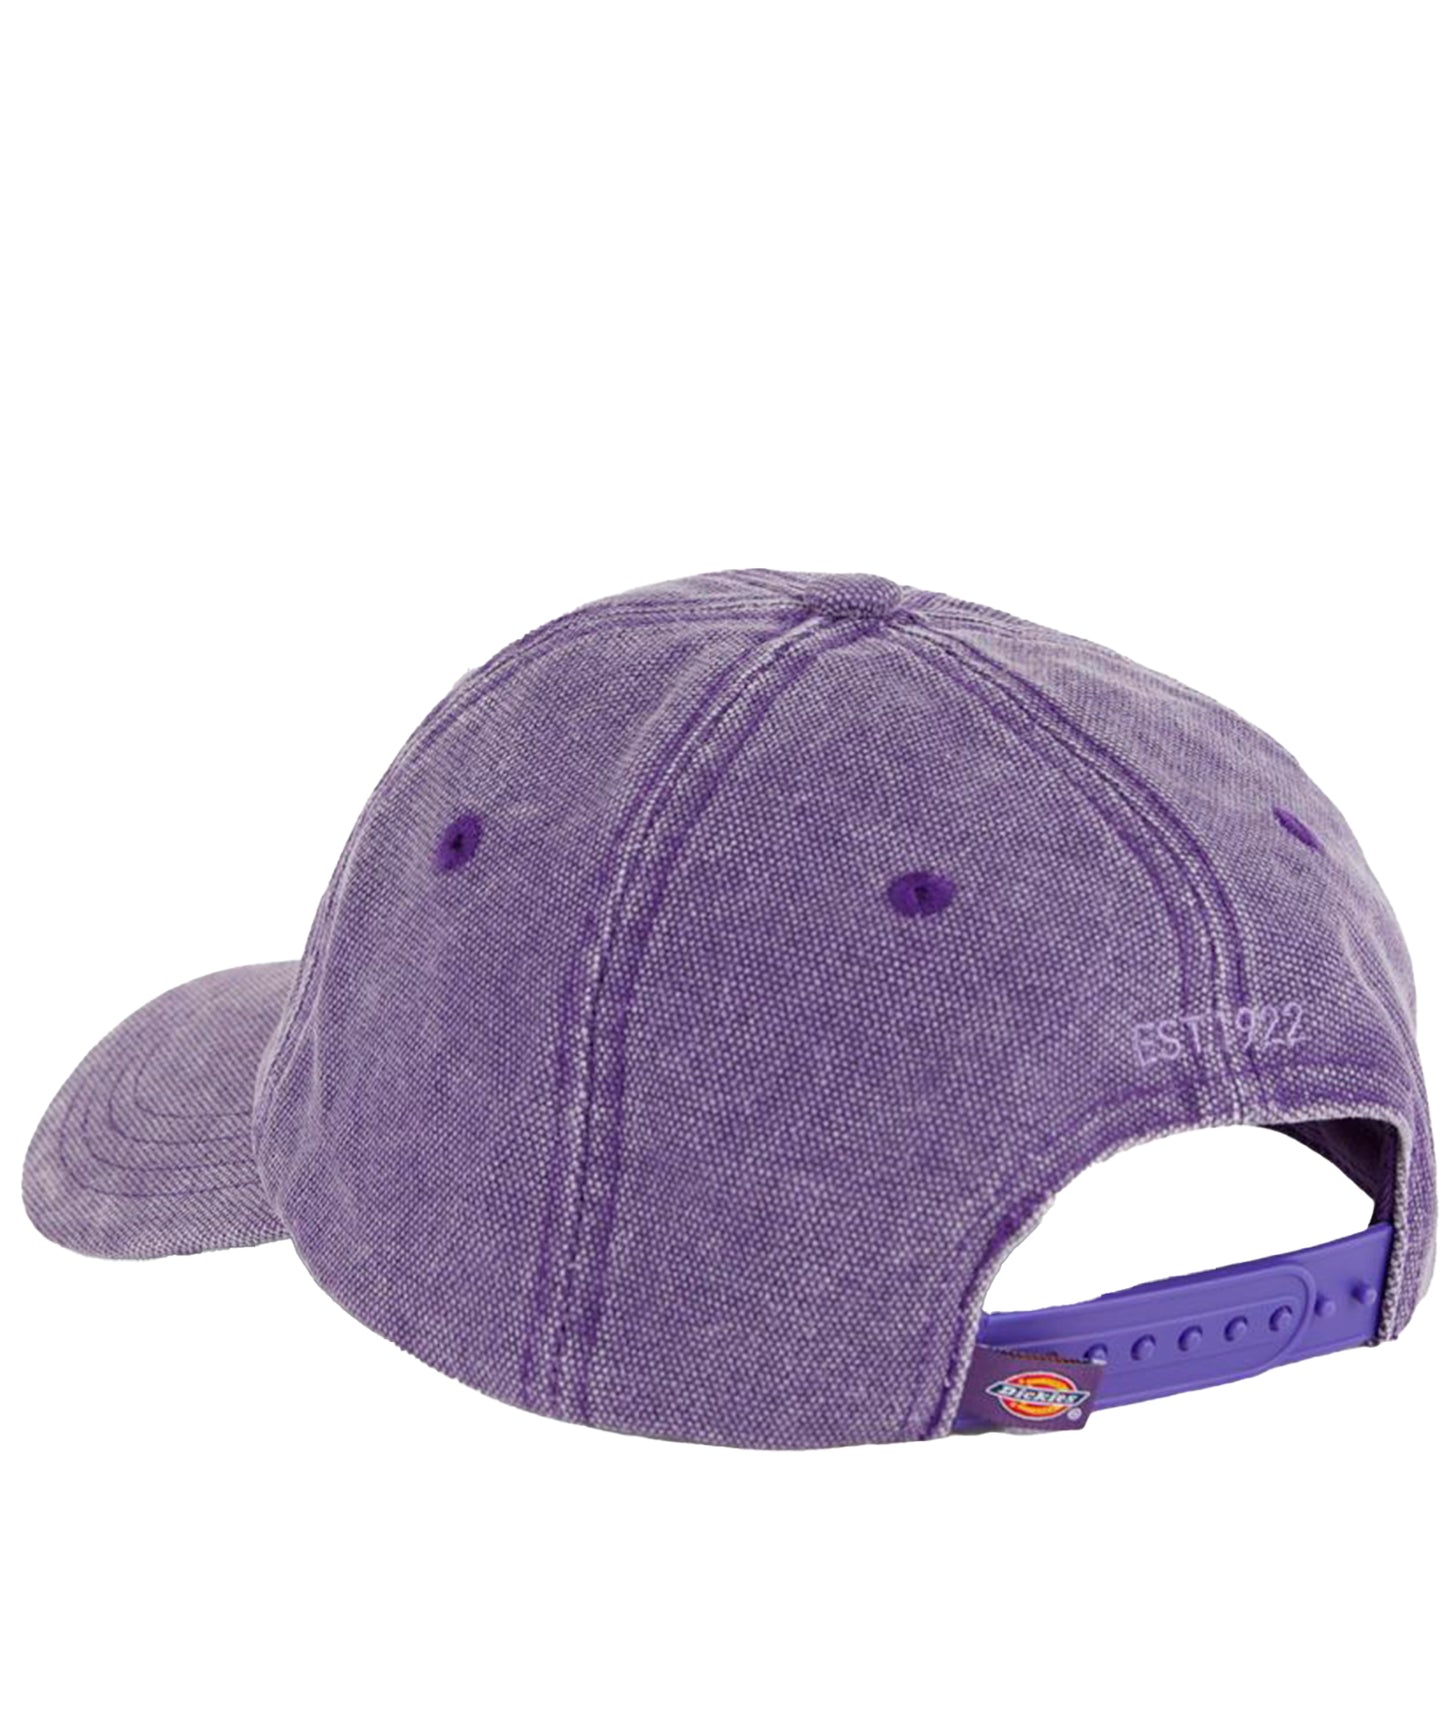 dickies-gorra-hardwick-color-púrpura-6-paneles-logo-dickies-en-el-centro-loneta-resistente-100%-algodón